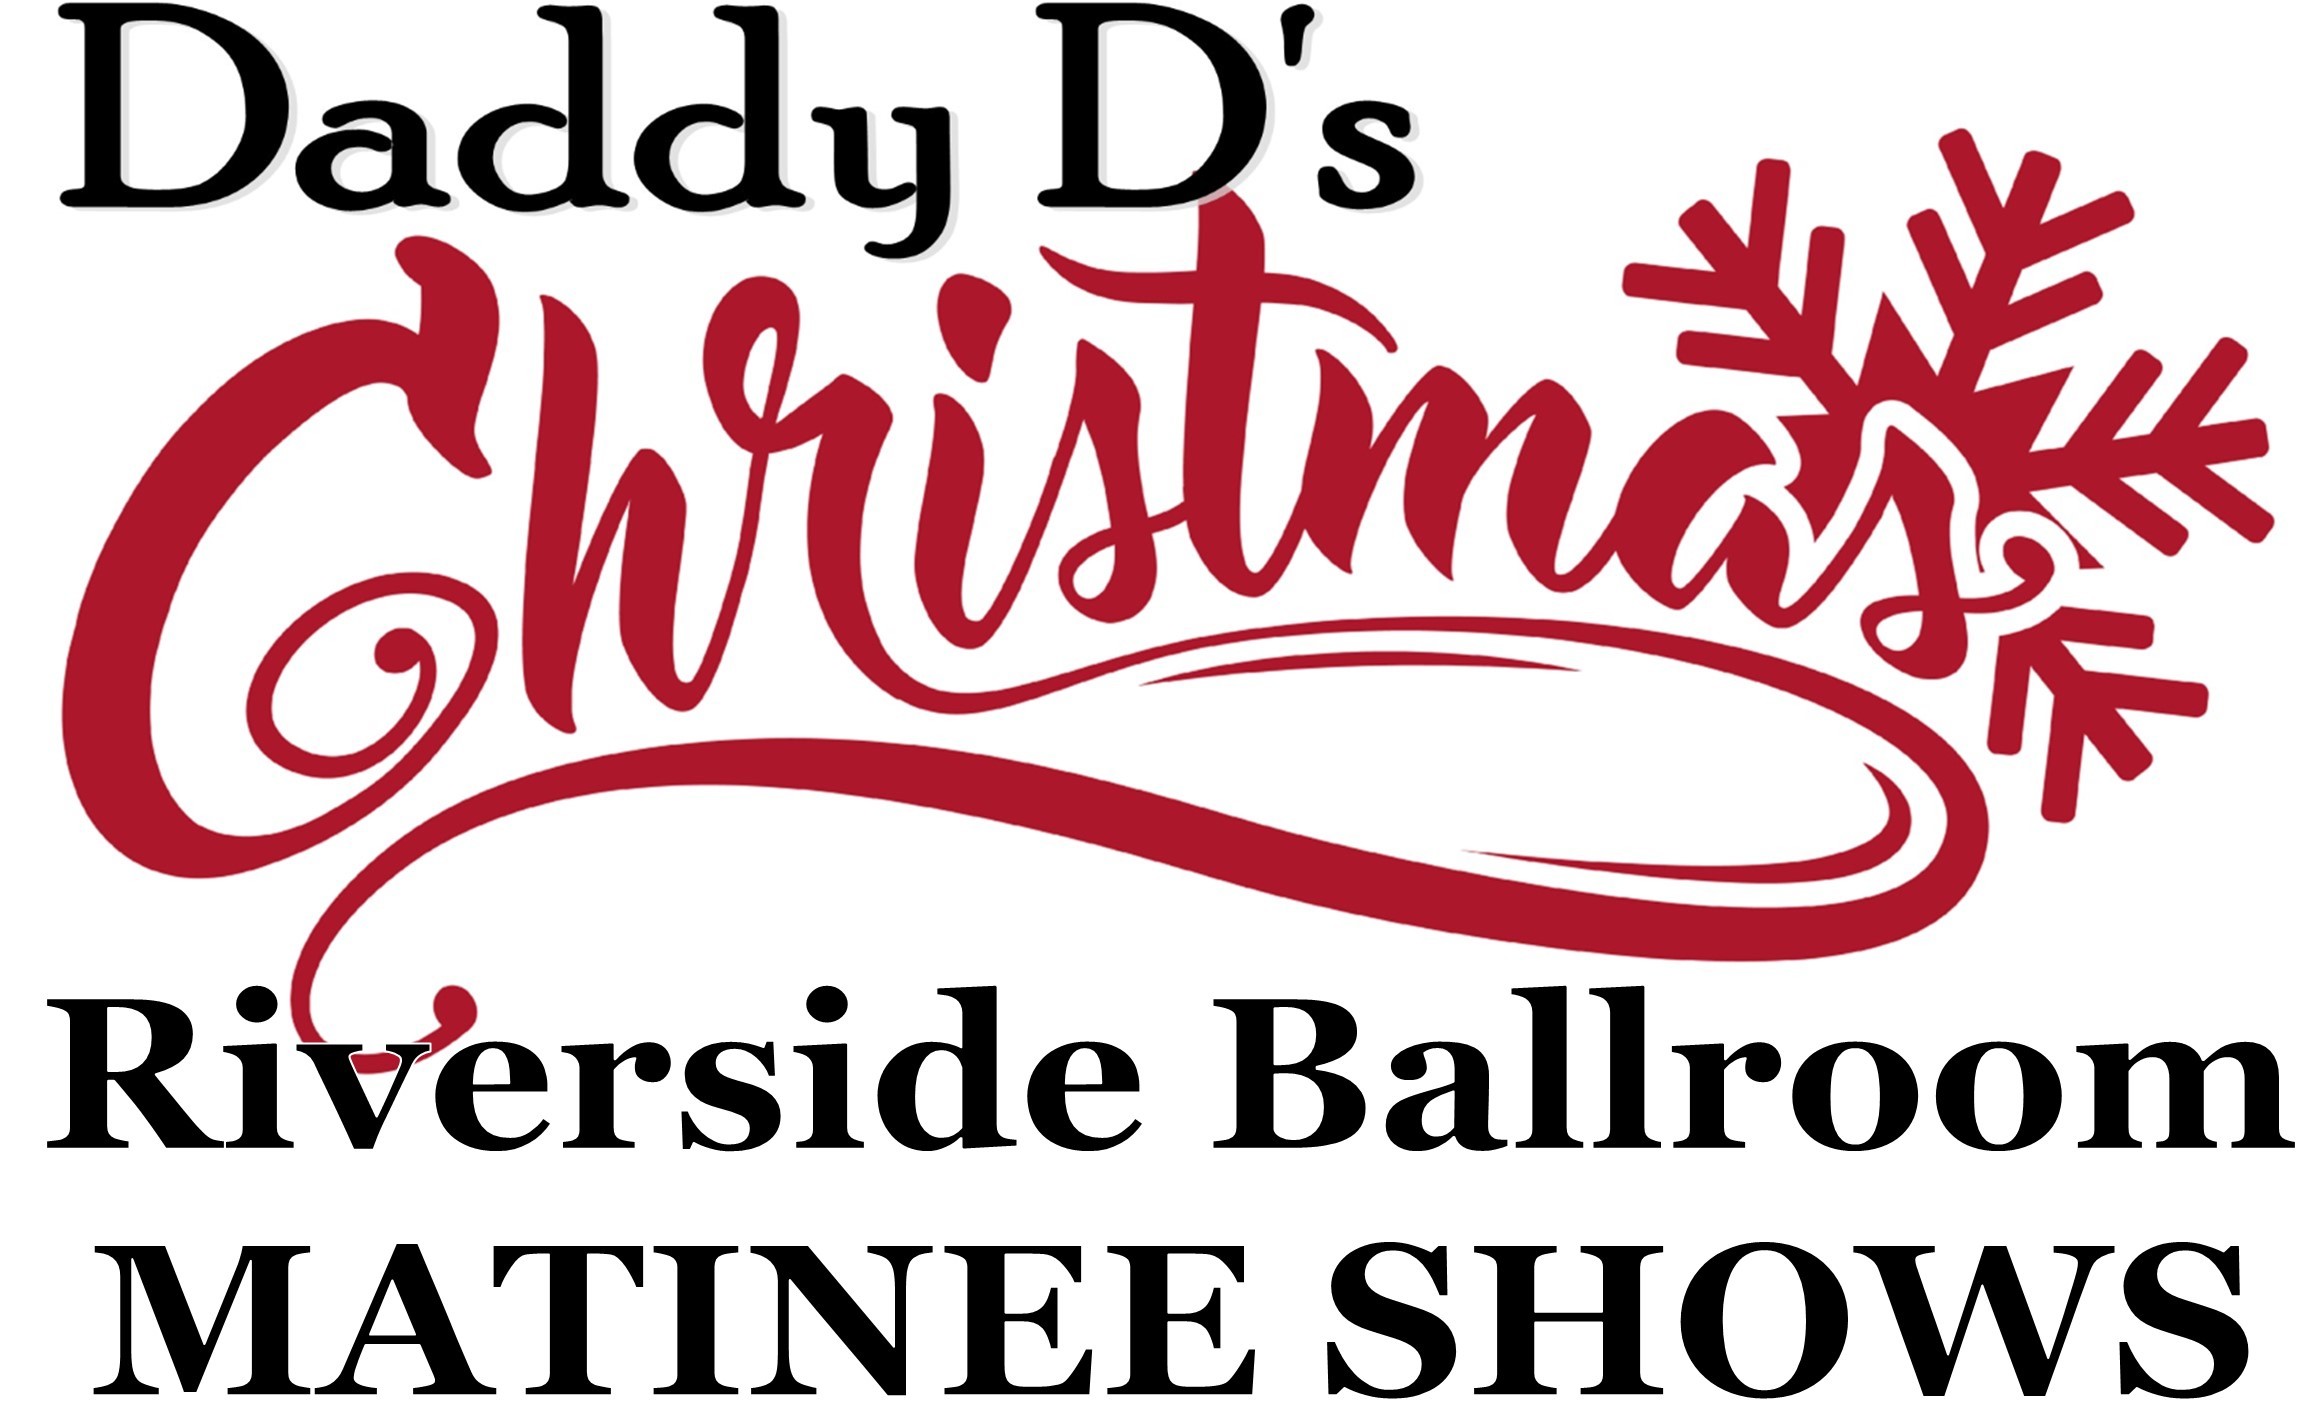 Christmas (Riverside Ballroom Matinees) Dec 15 & 17